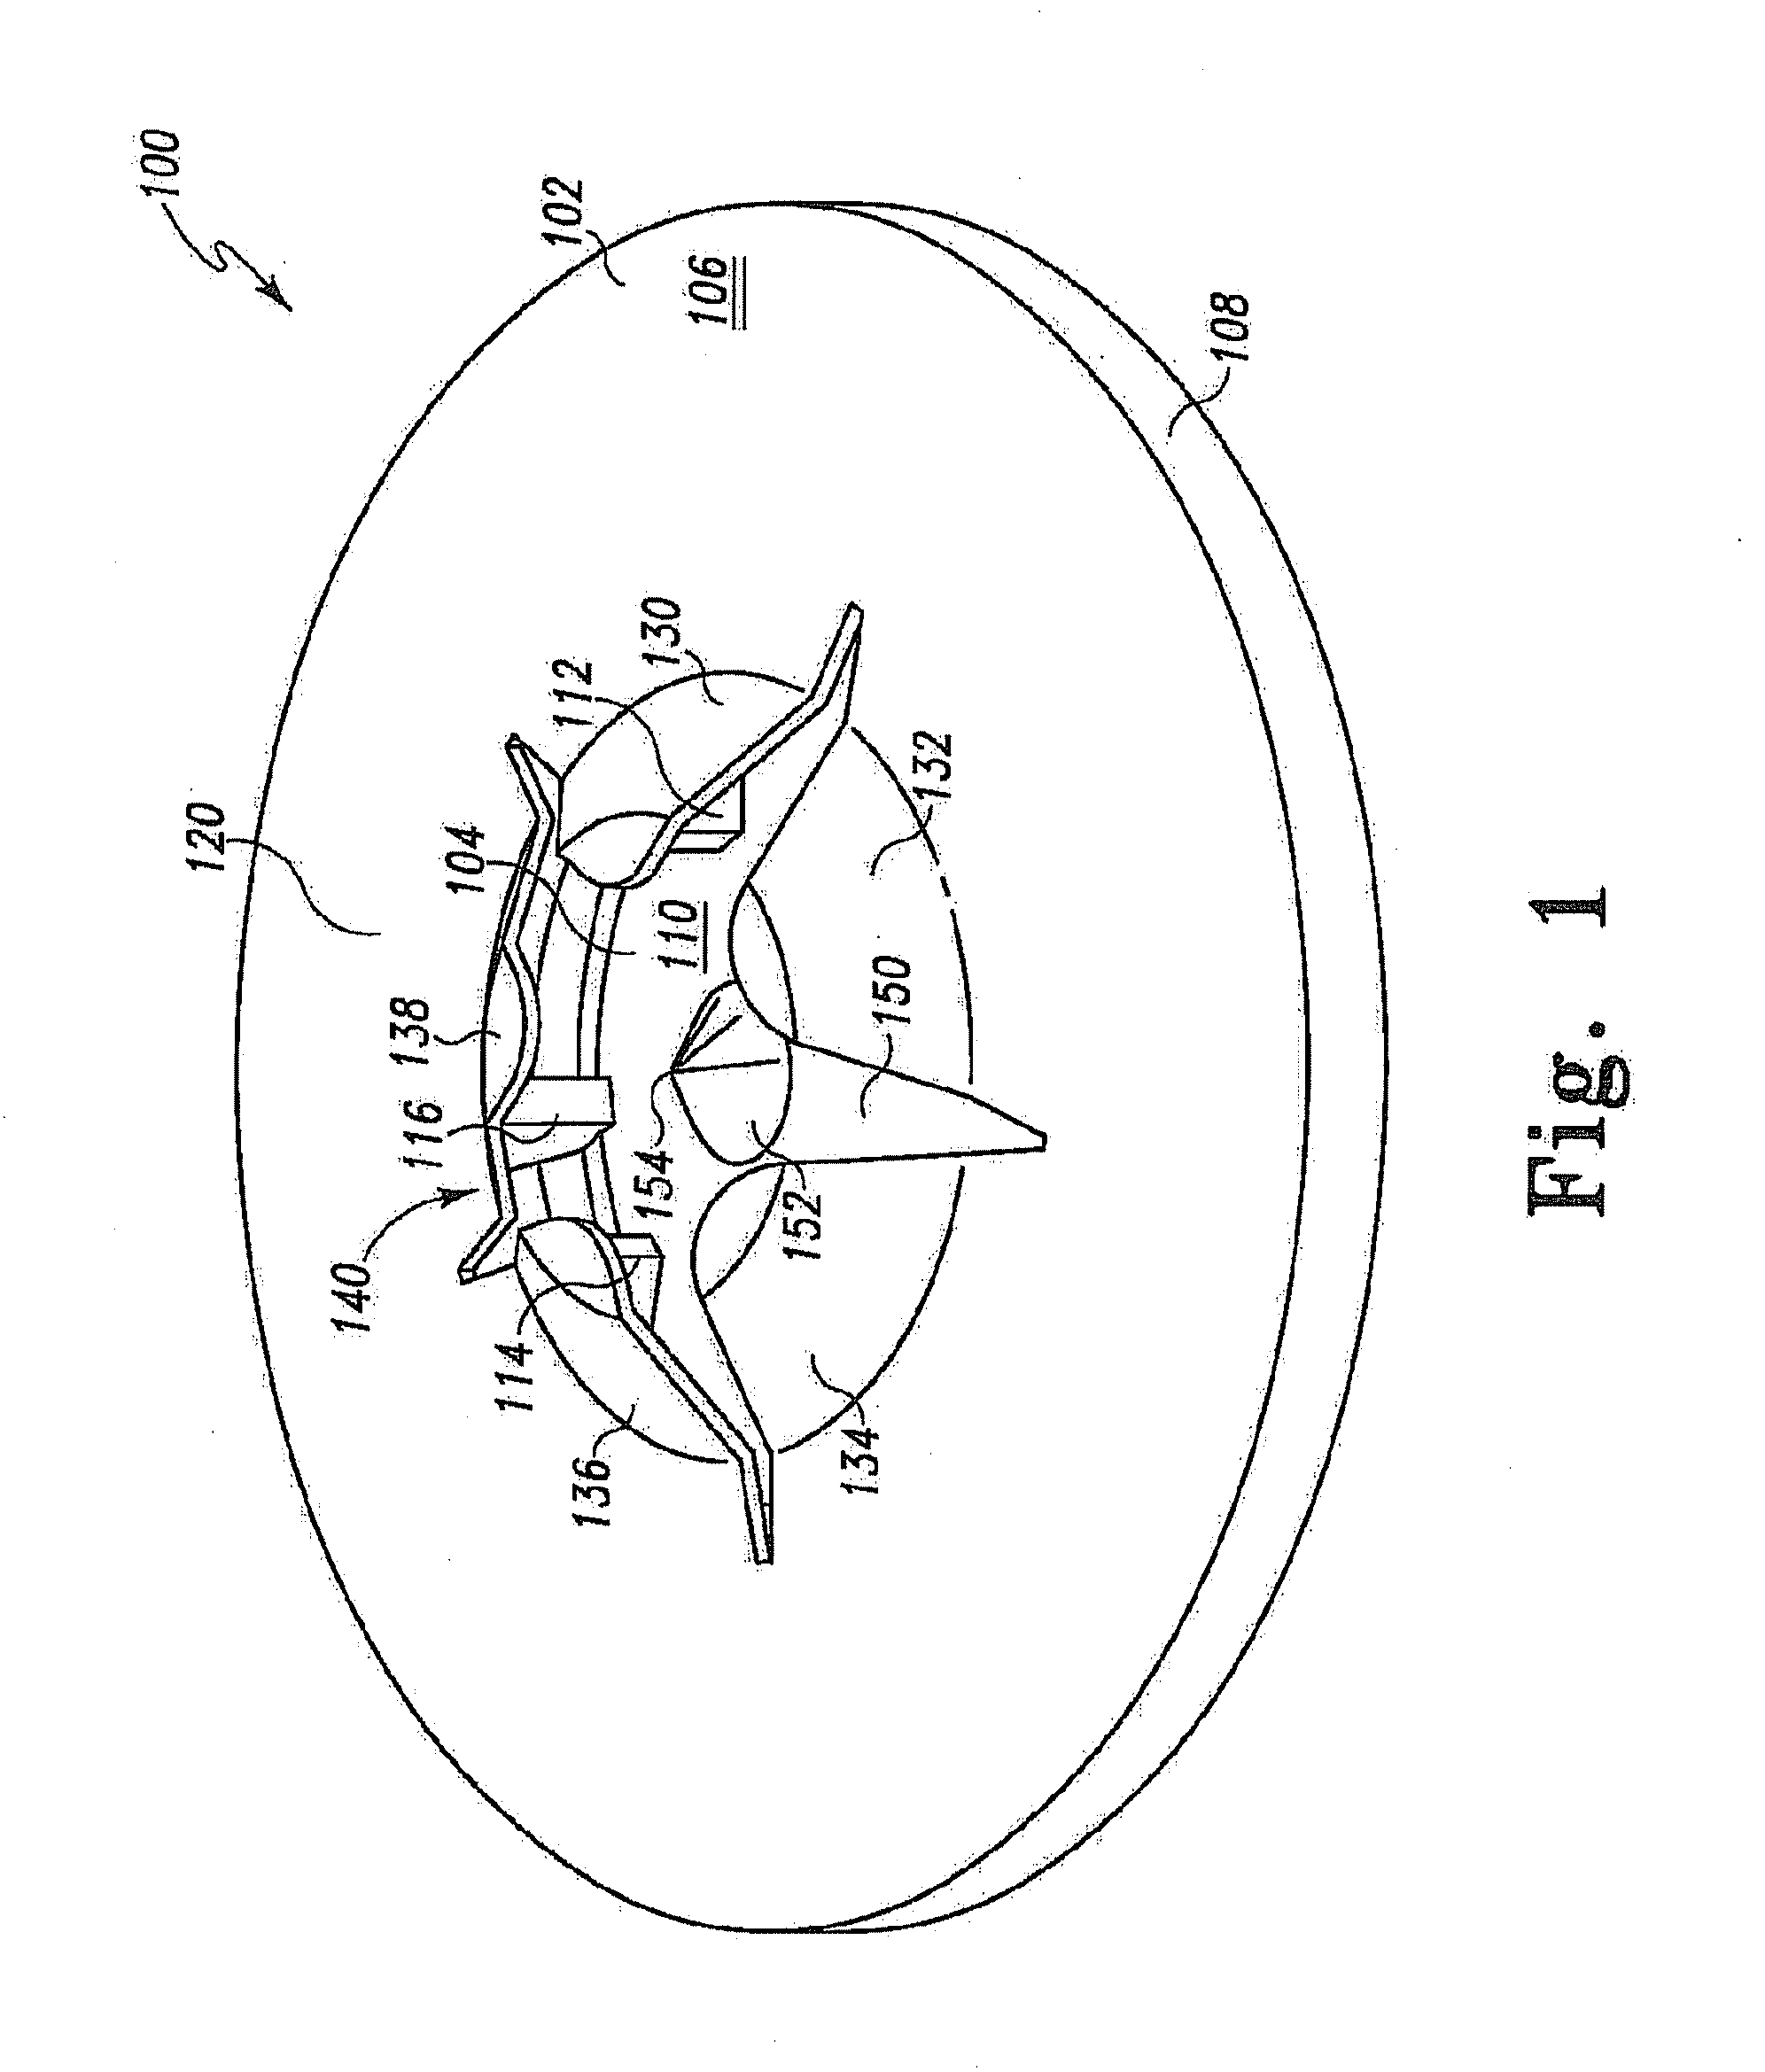 Phase plug and acoustic lens for direct radiating loudspeaker